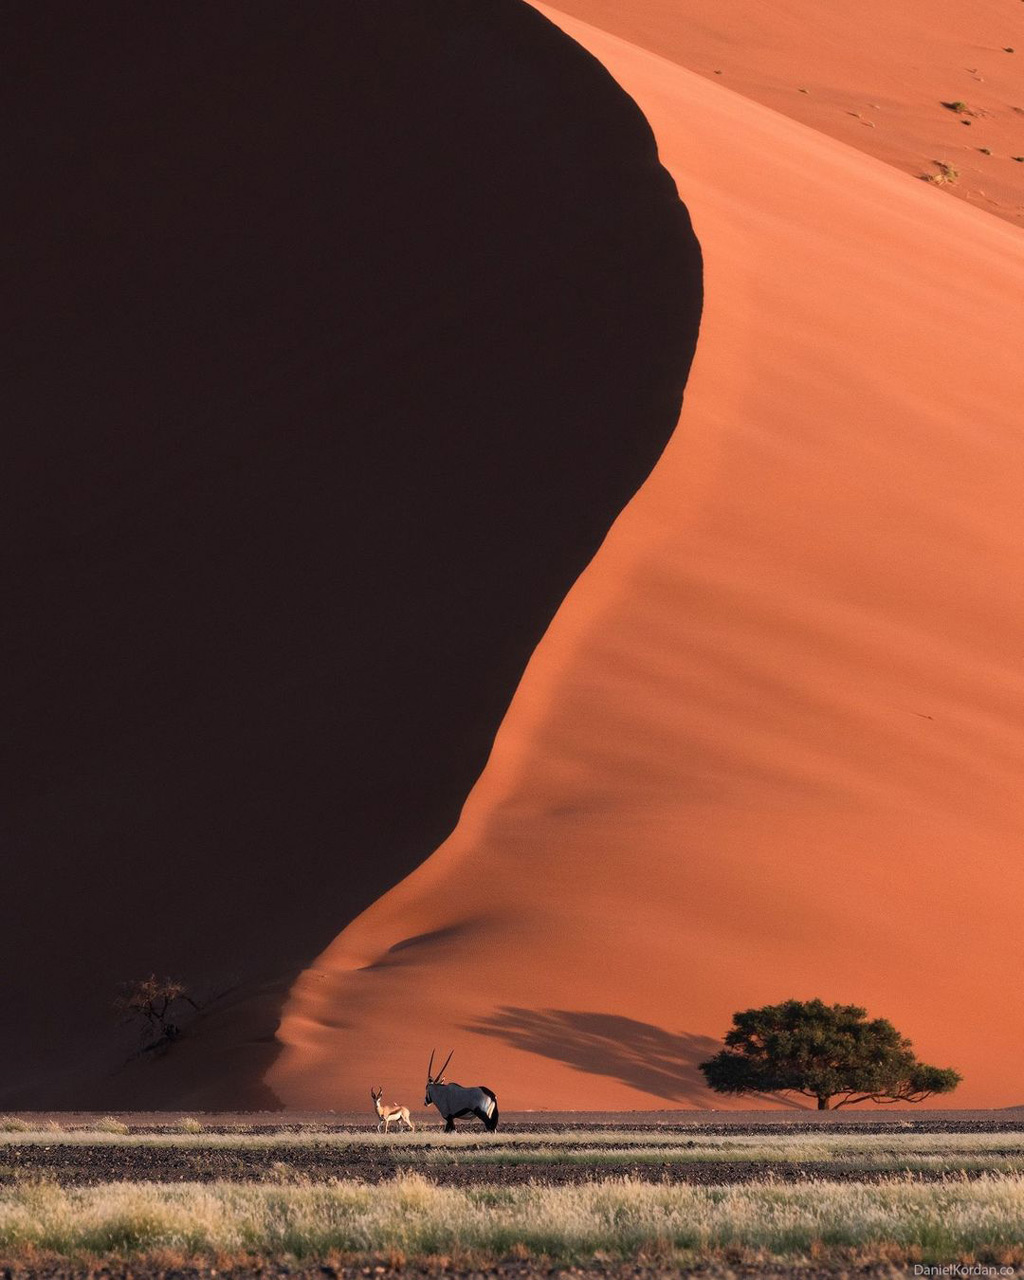 Giant Dune